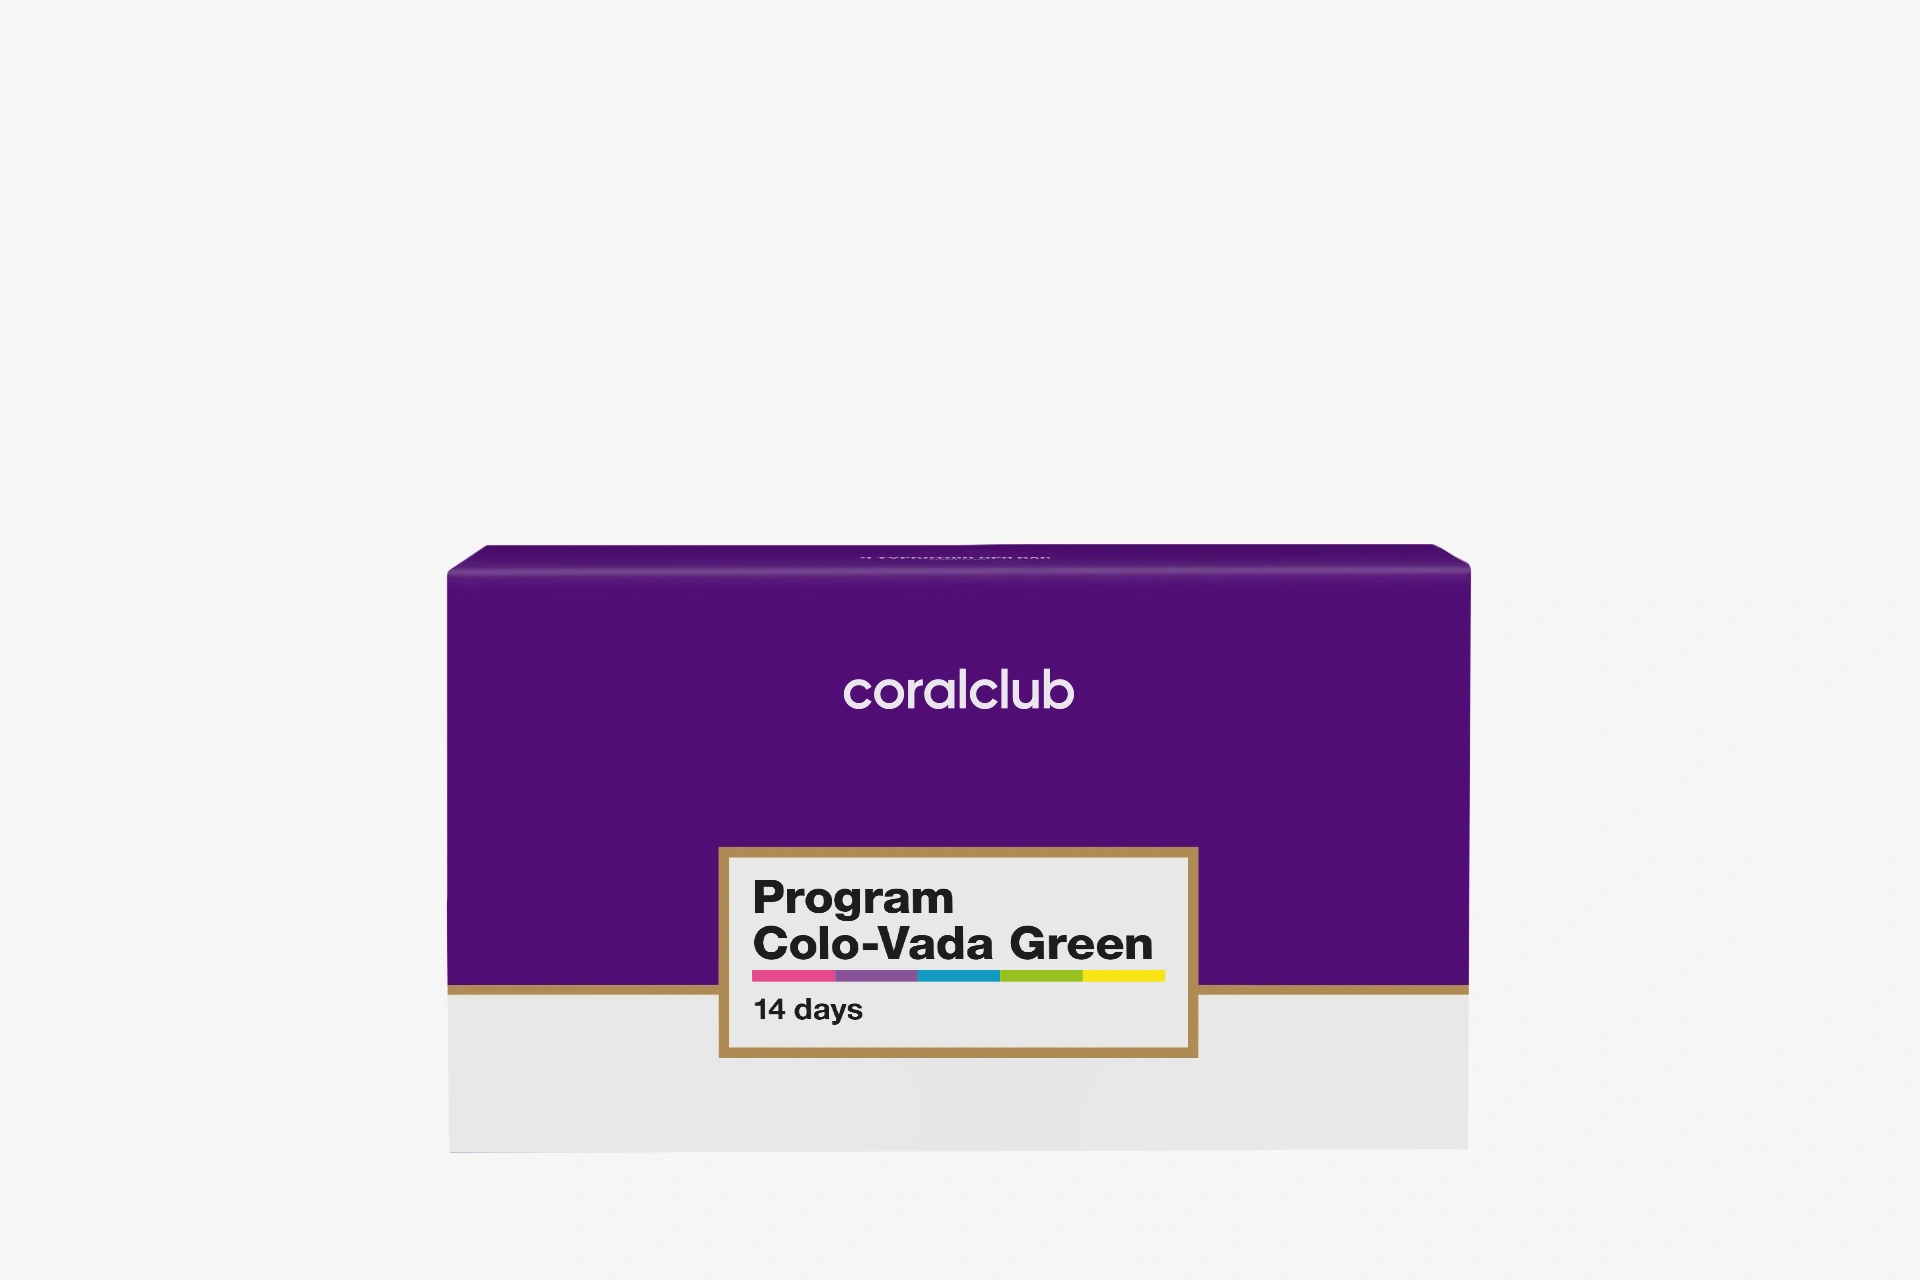 Colo-Vada Green